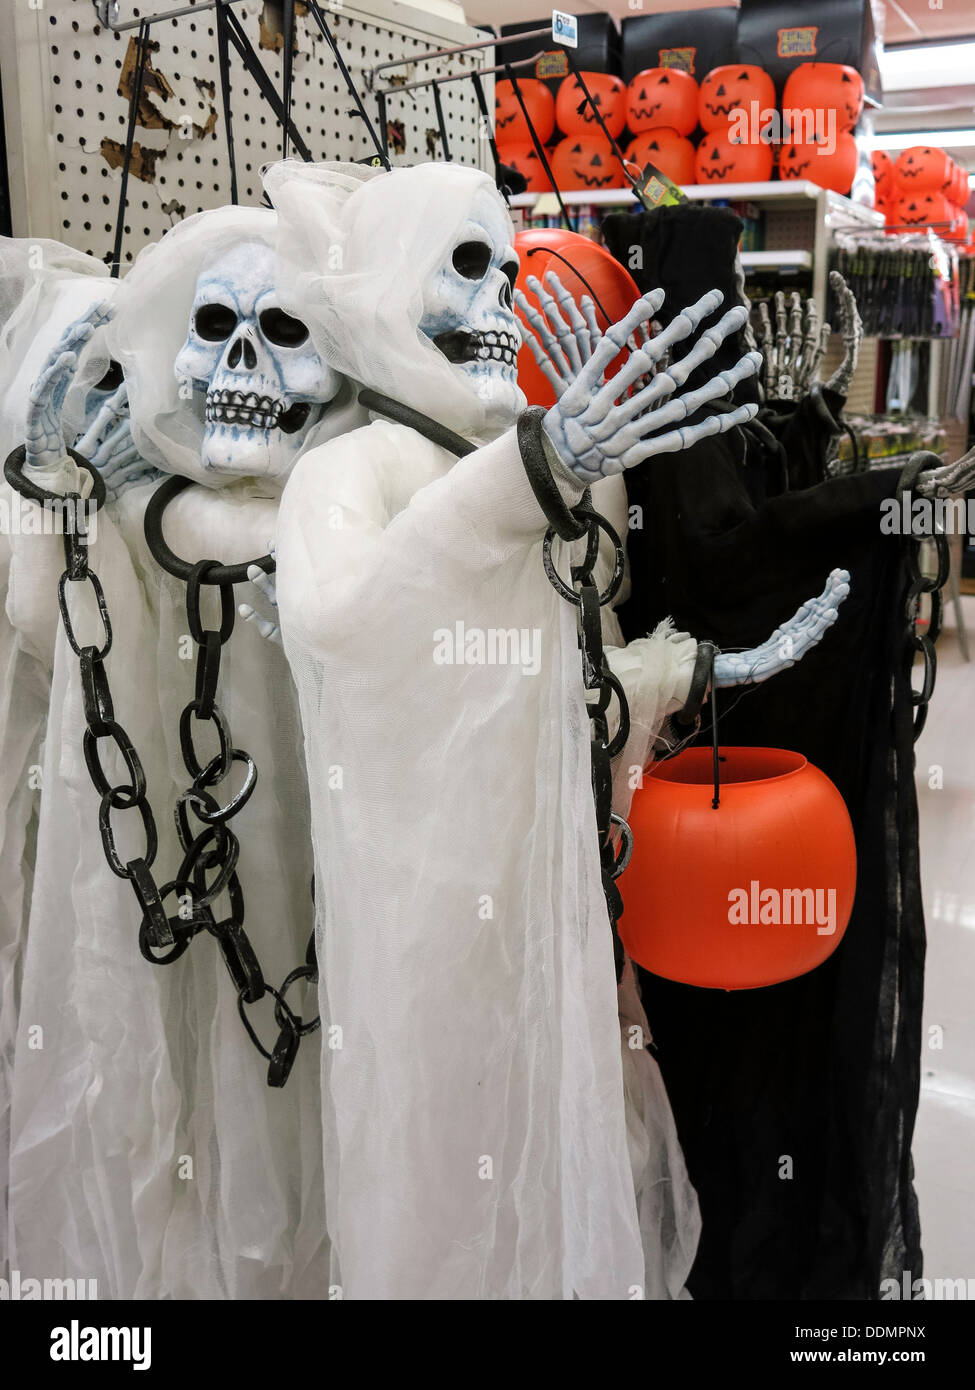 Kmart Halloween Store Display, NYC Stock Photo - Alamy